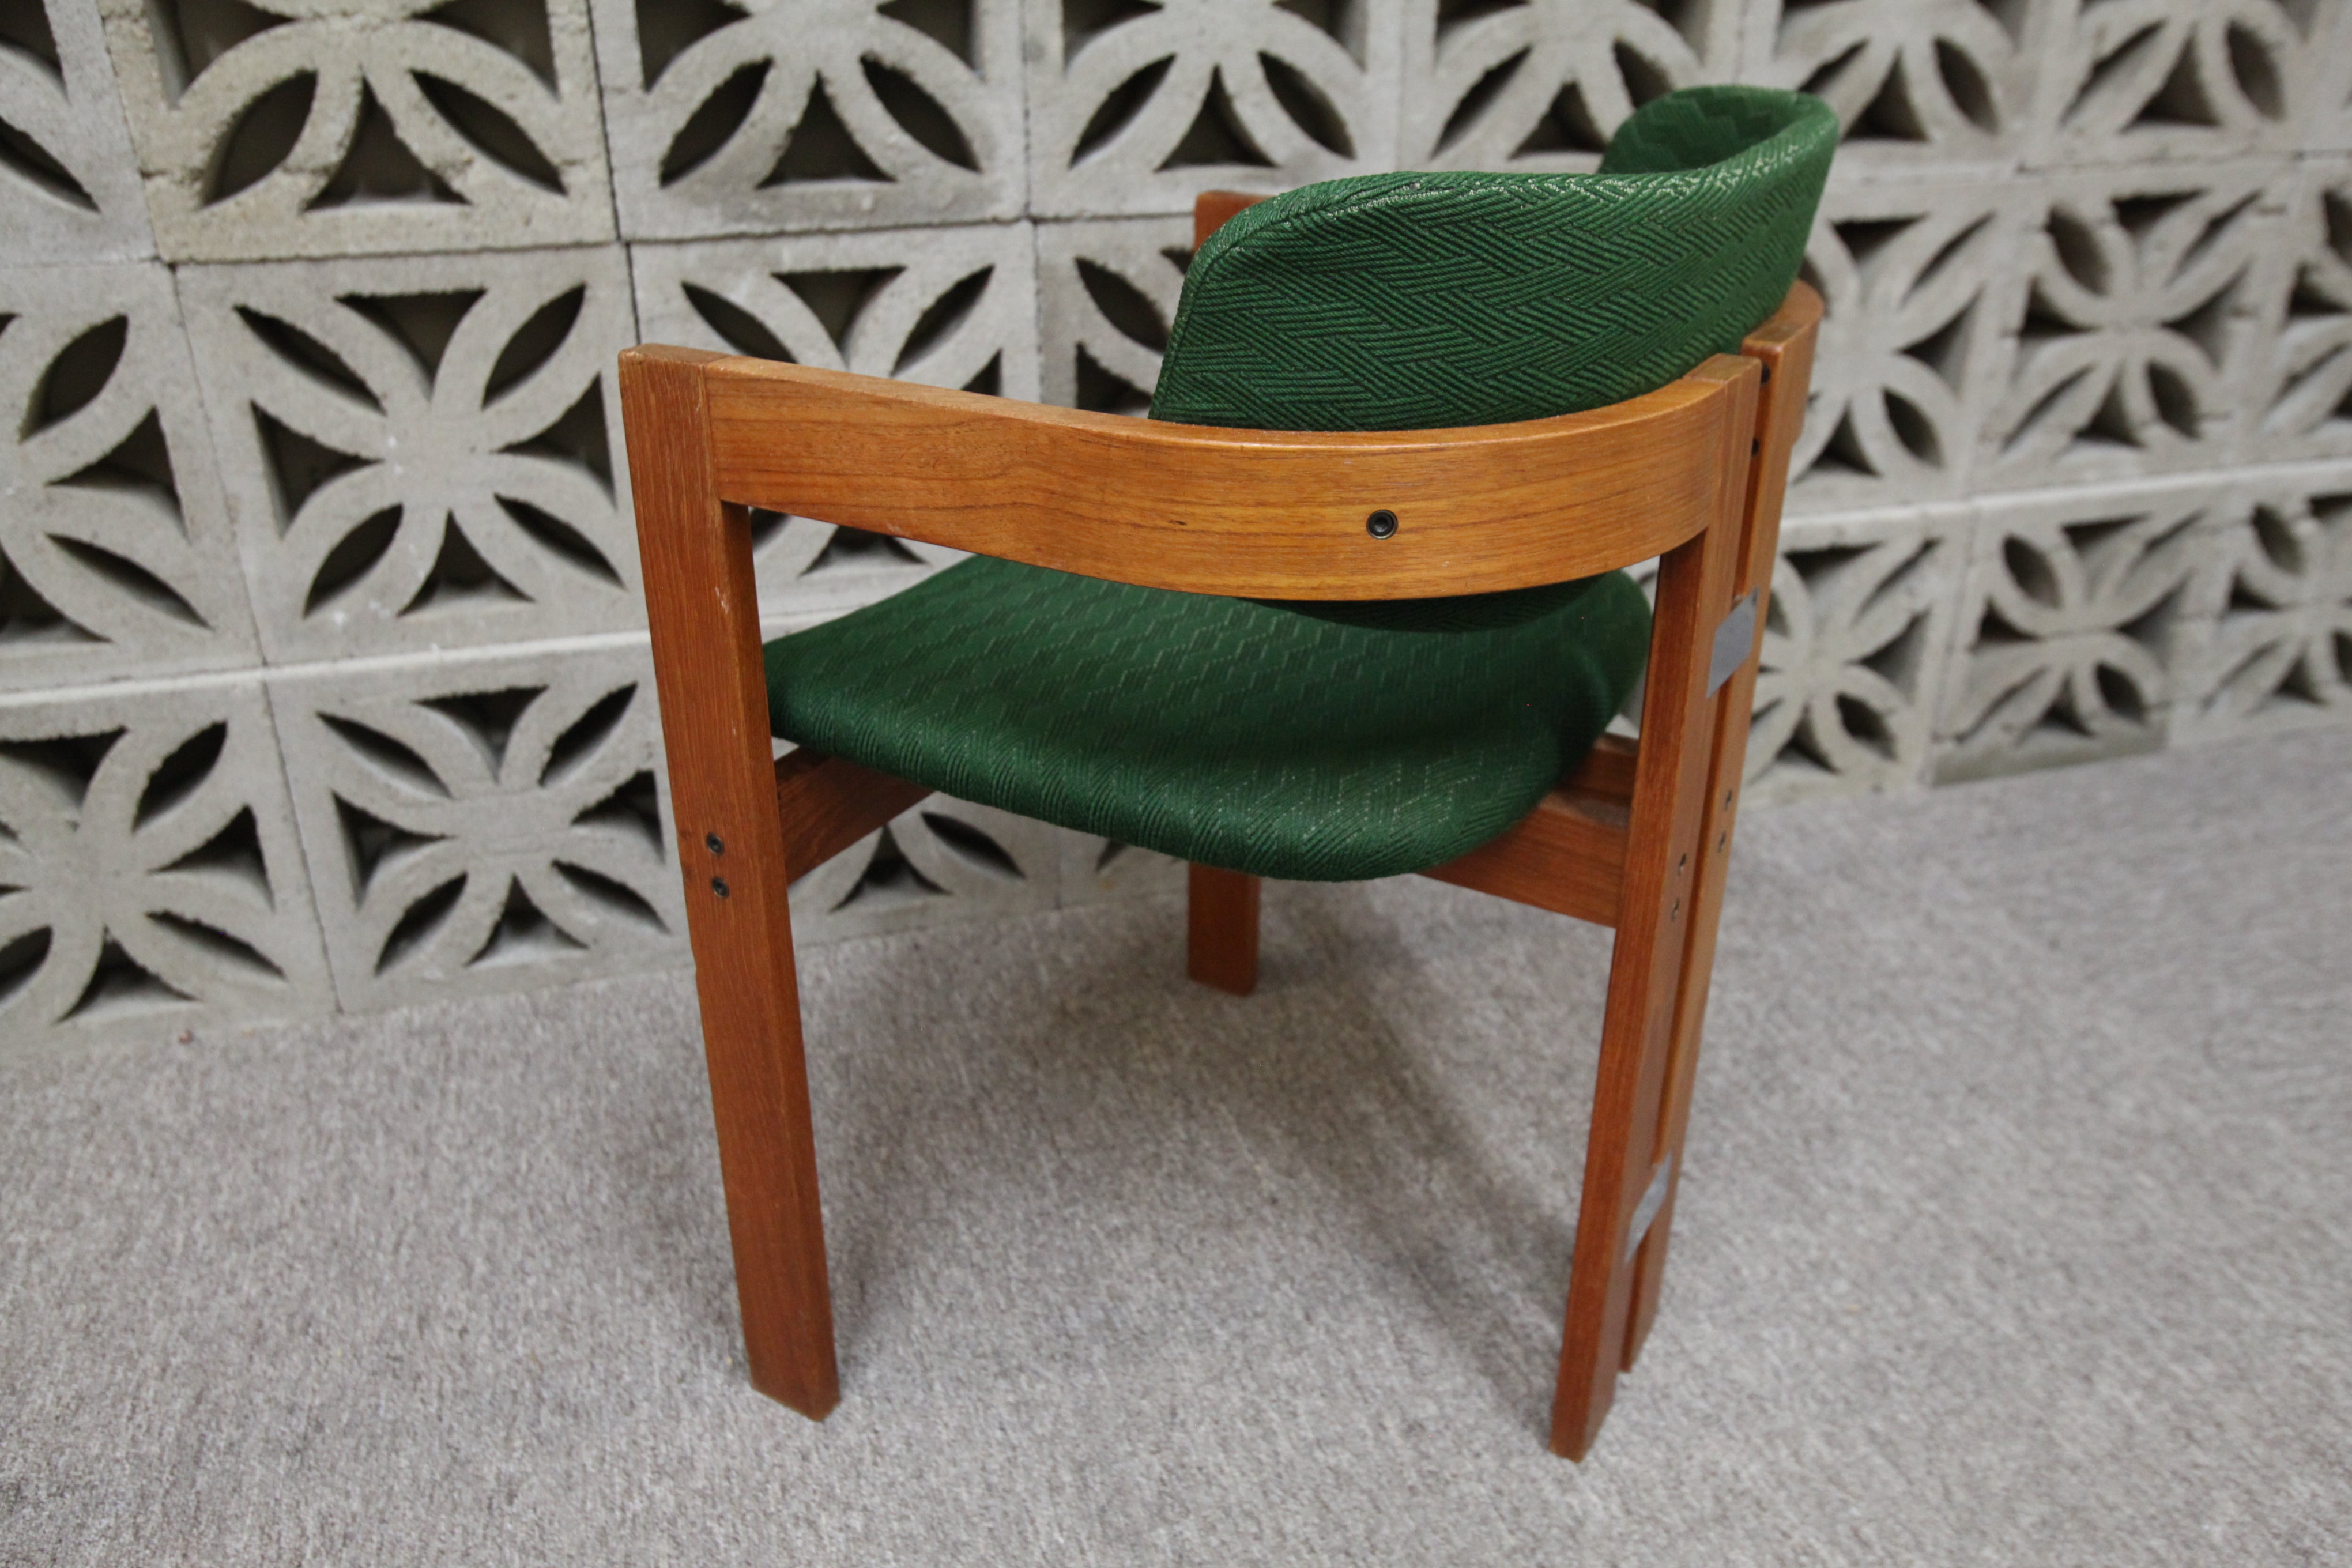 Very Cool Set of 8 Vintage Teak Dining Chairs (Original) (21.5"W x 20"D x 28.5"H)